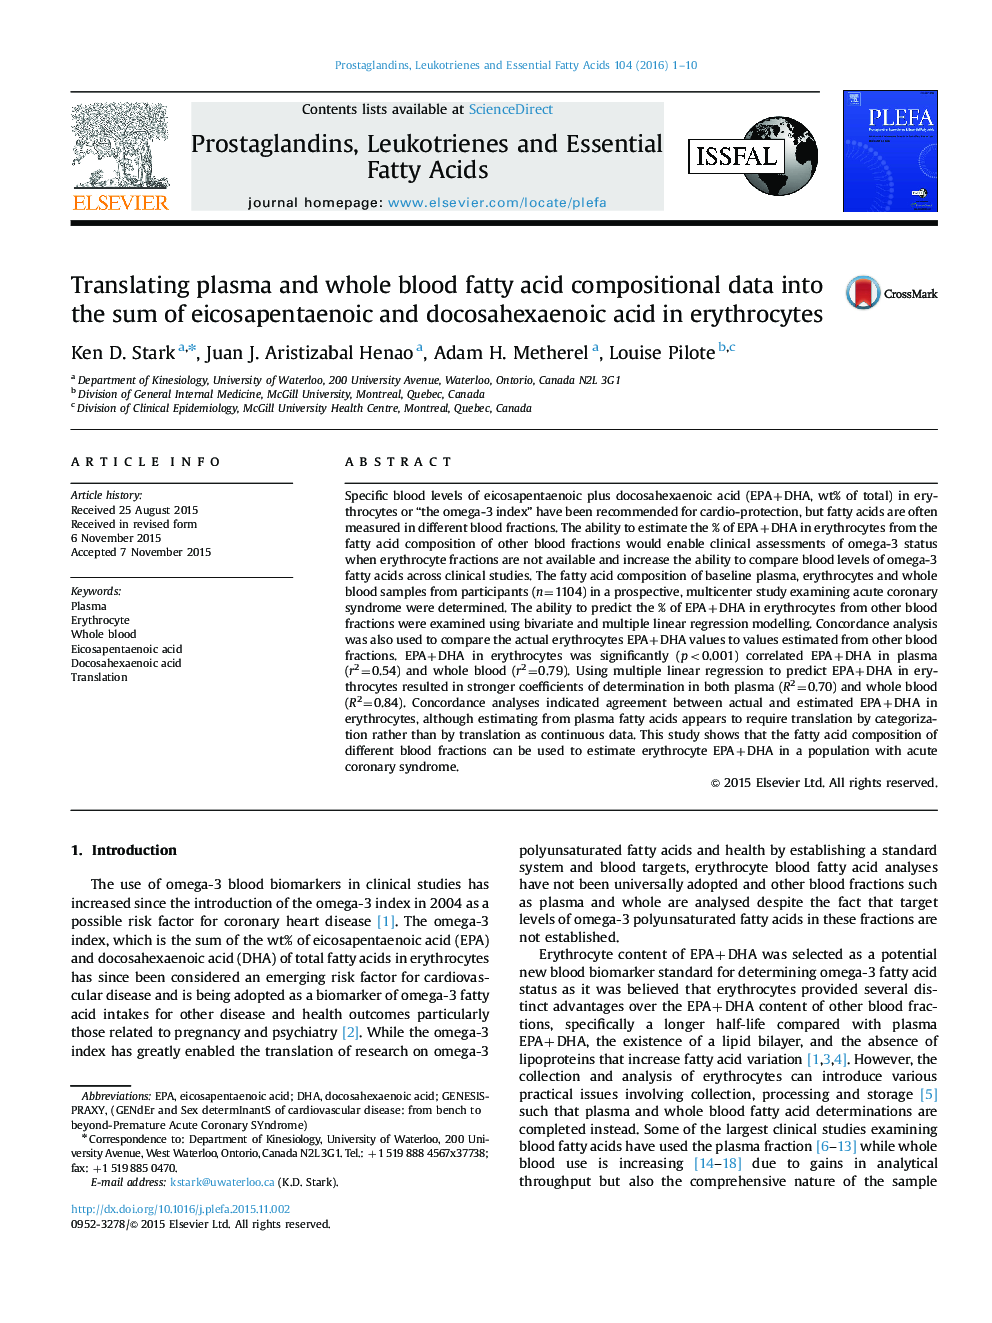 Translating plasma and whole blood fatty acid compositional data into the sum of eicosapentaenoic and docosahexaenoic acid in erythrocytes